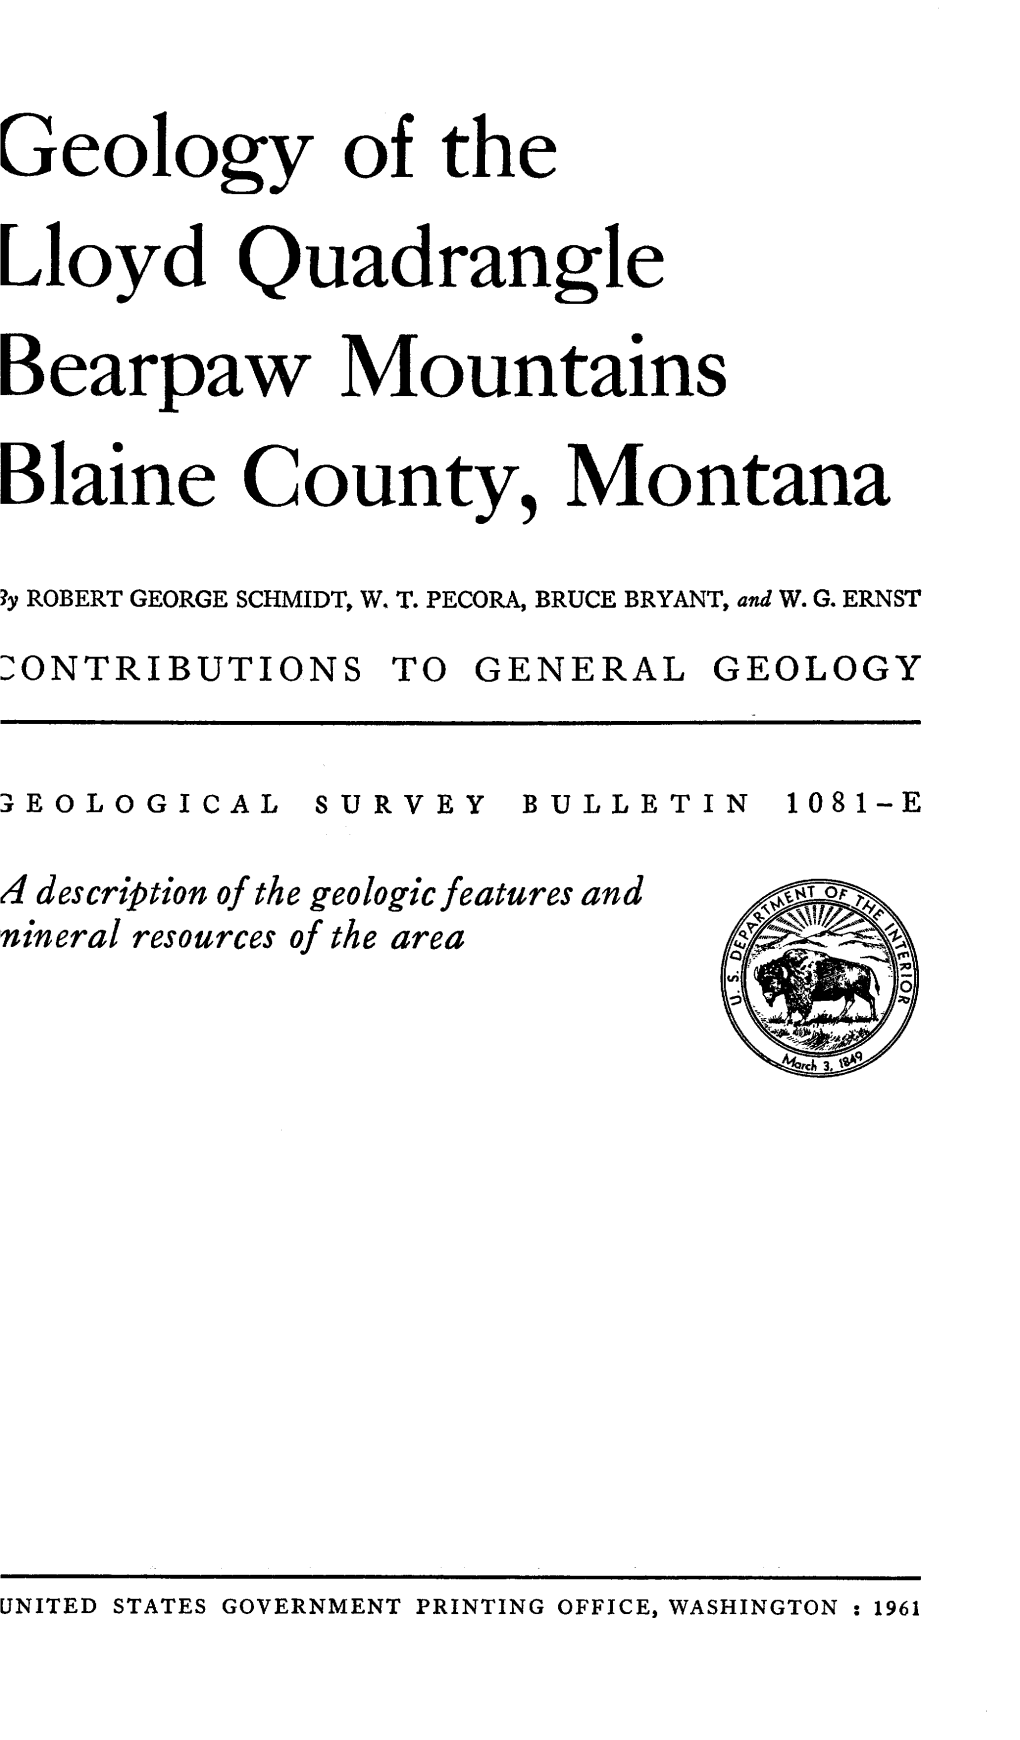 Geology of the Lloyd Quadrangle Bearpaw Mountains Blaine County, Montana